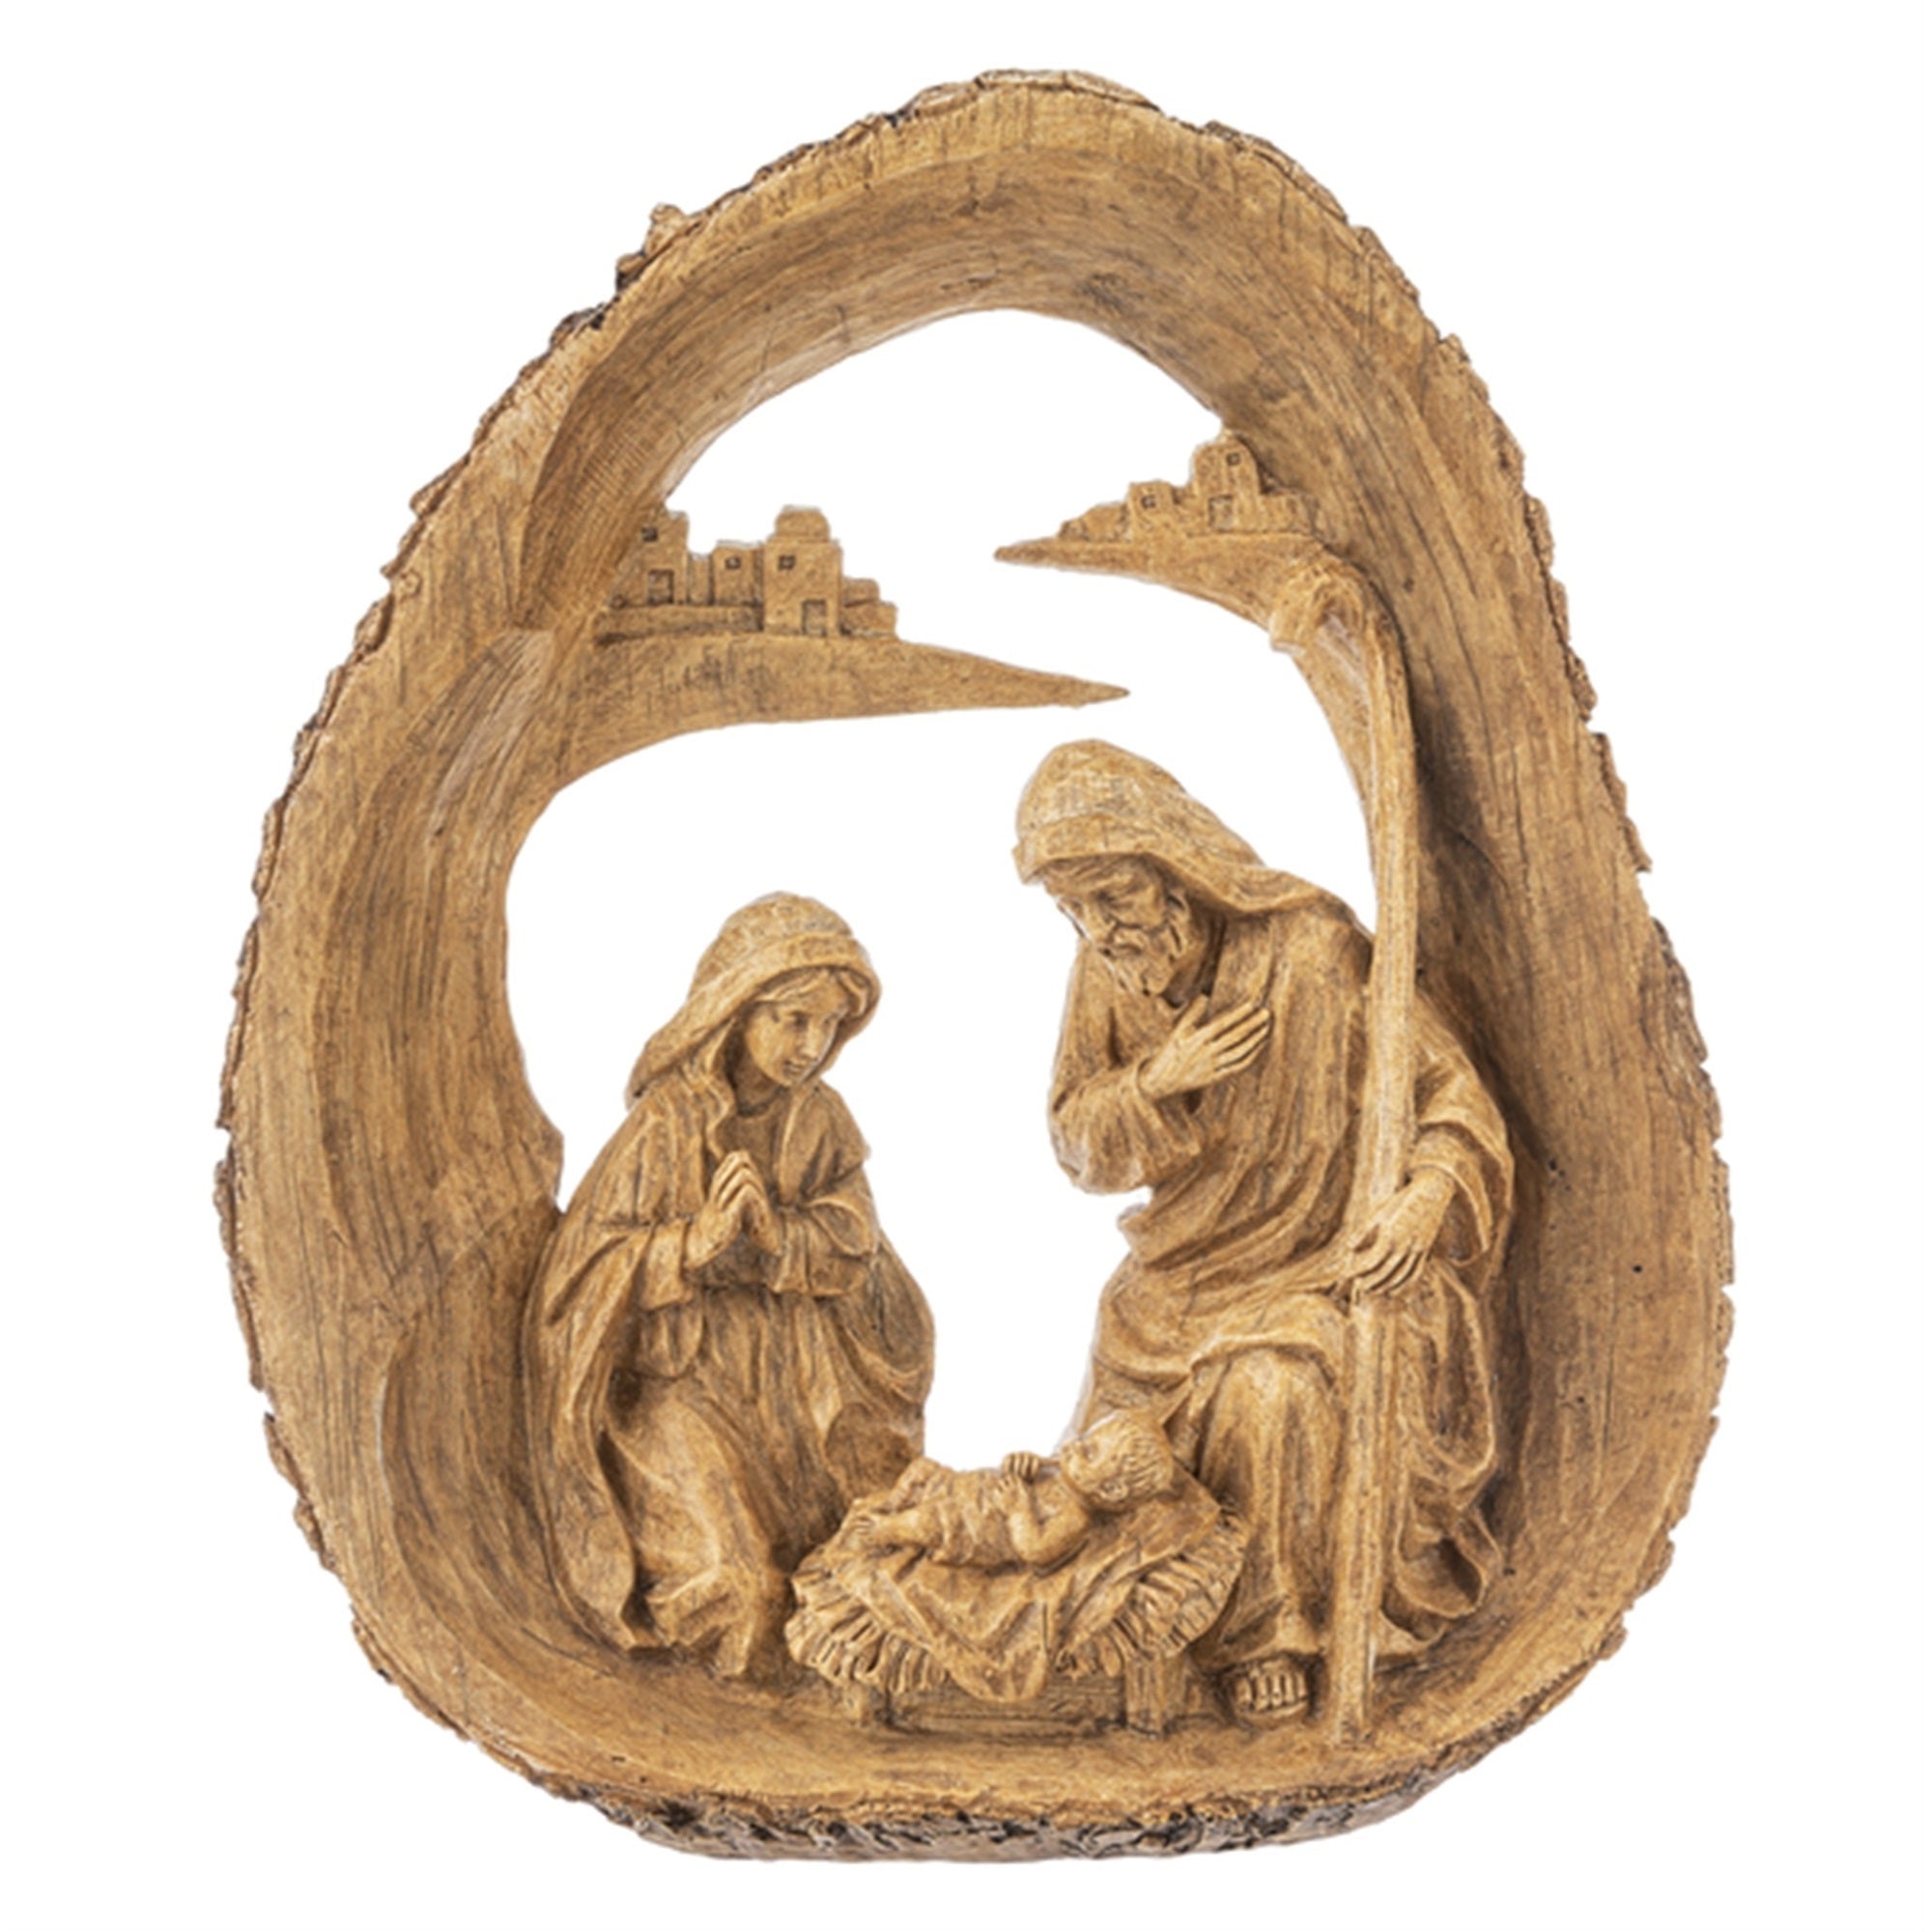 Ganz Log Nativity Figurine Christmas Decoration, Brown